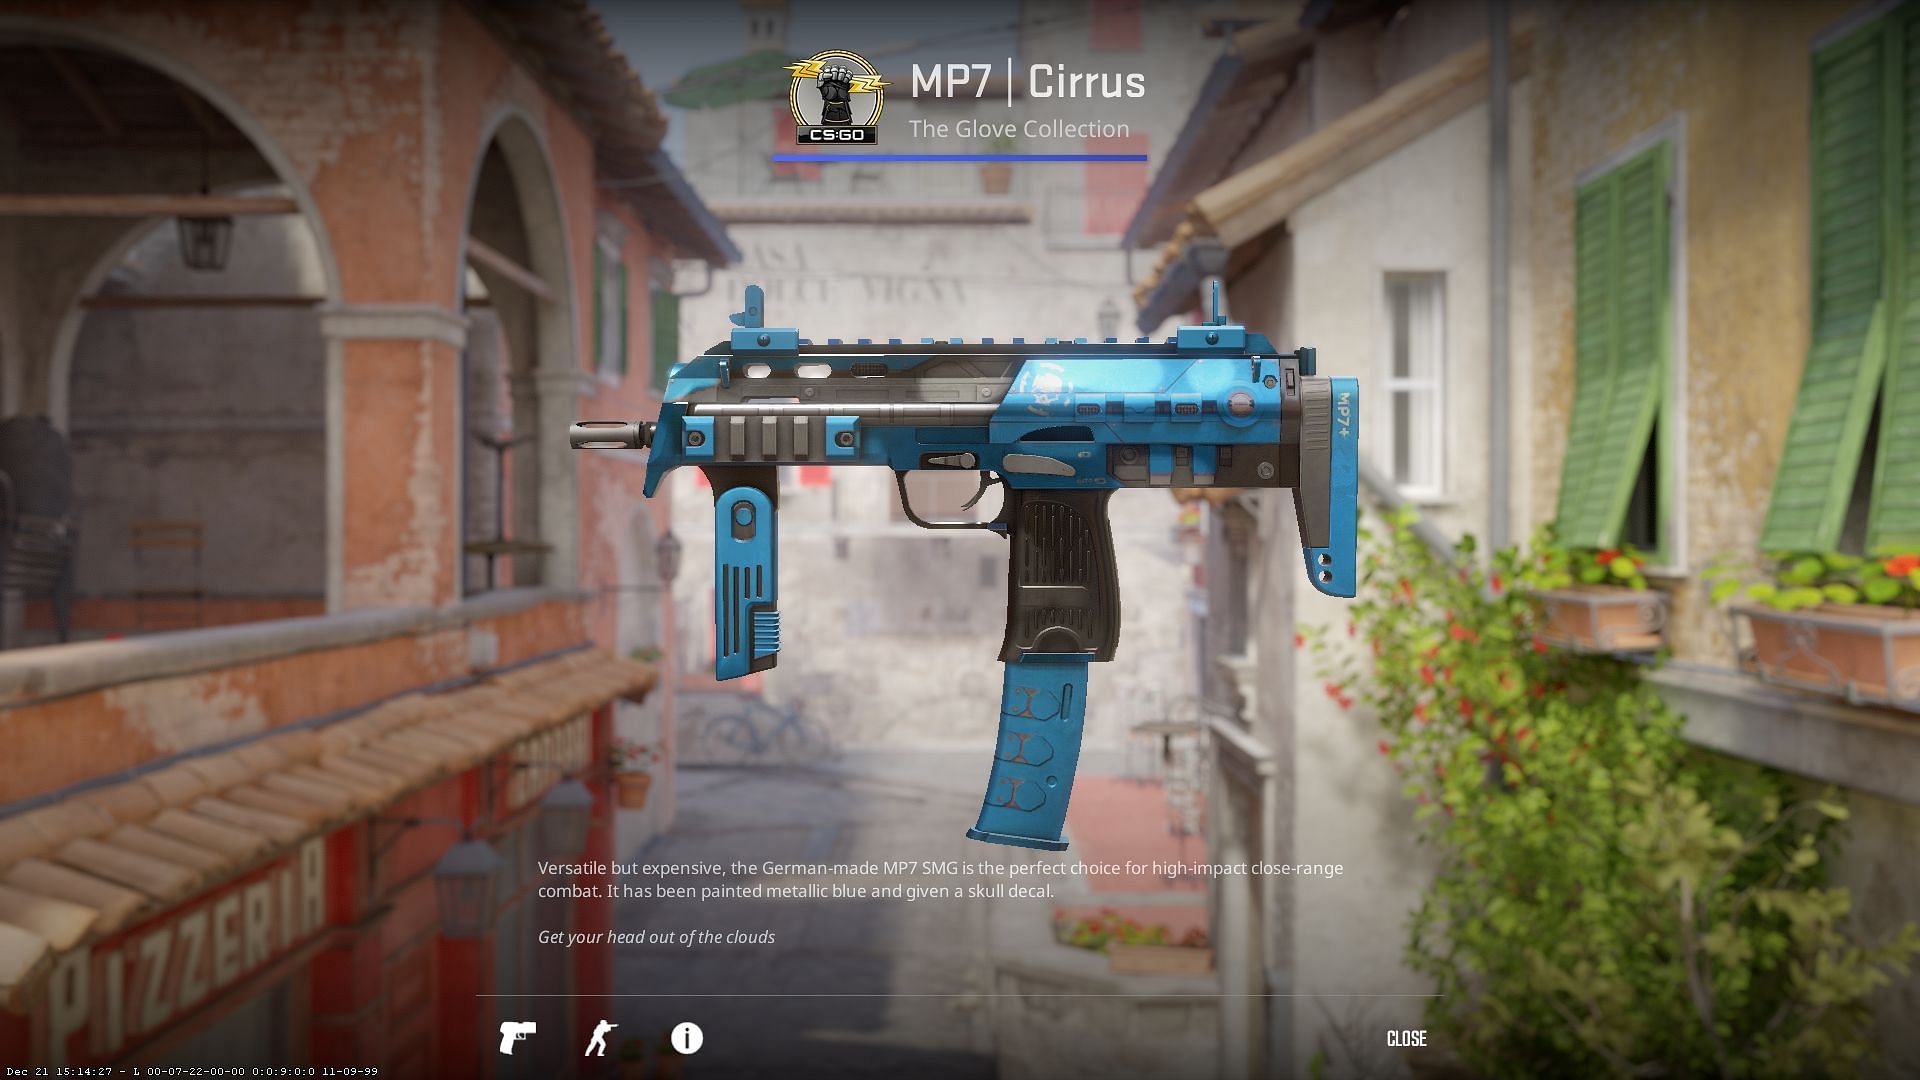 MP7 Cirrus (Image via Valve)